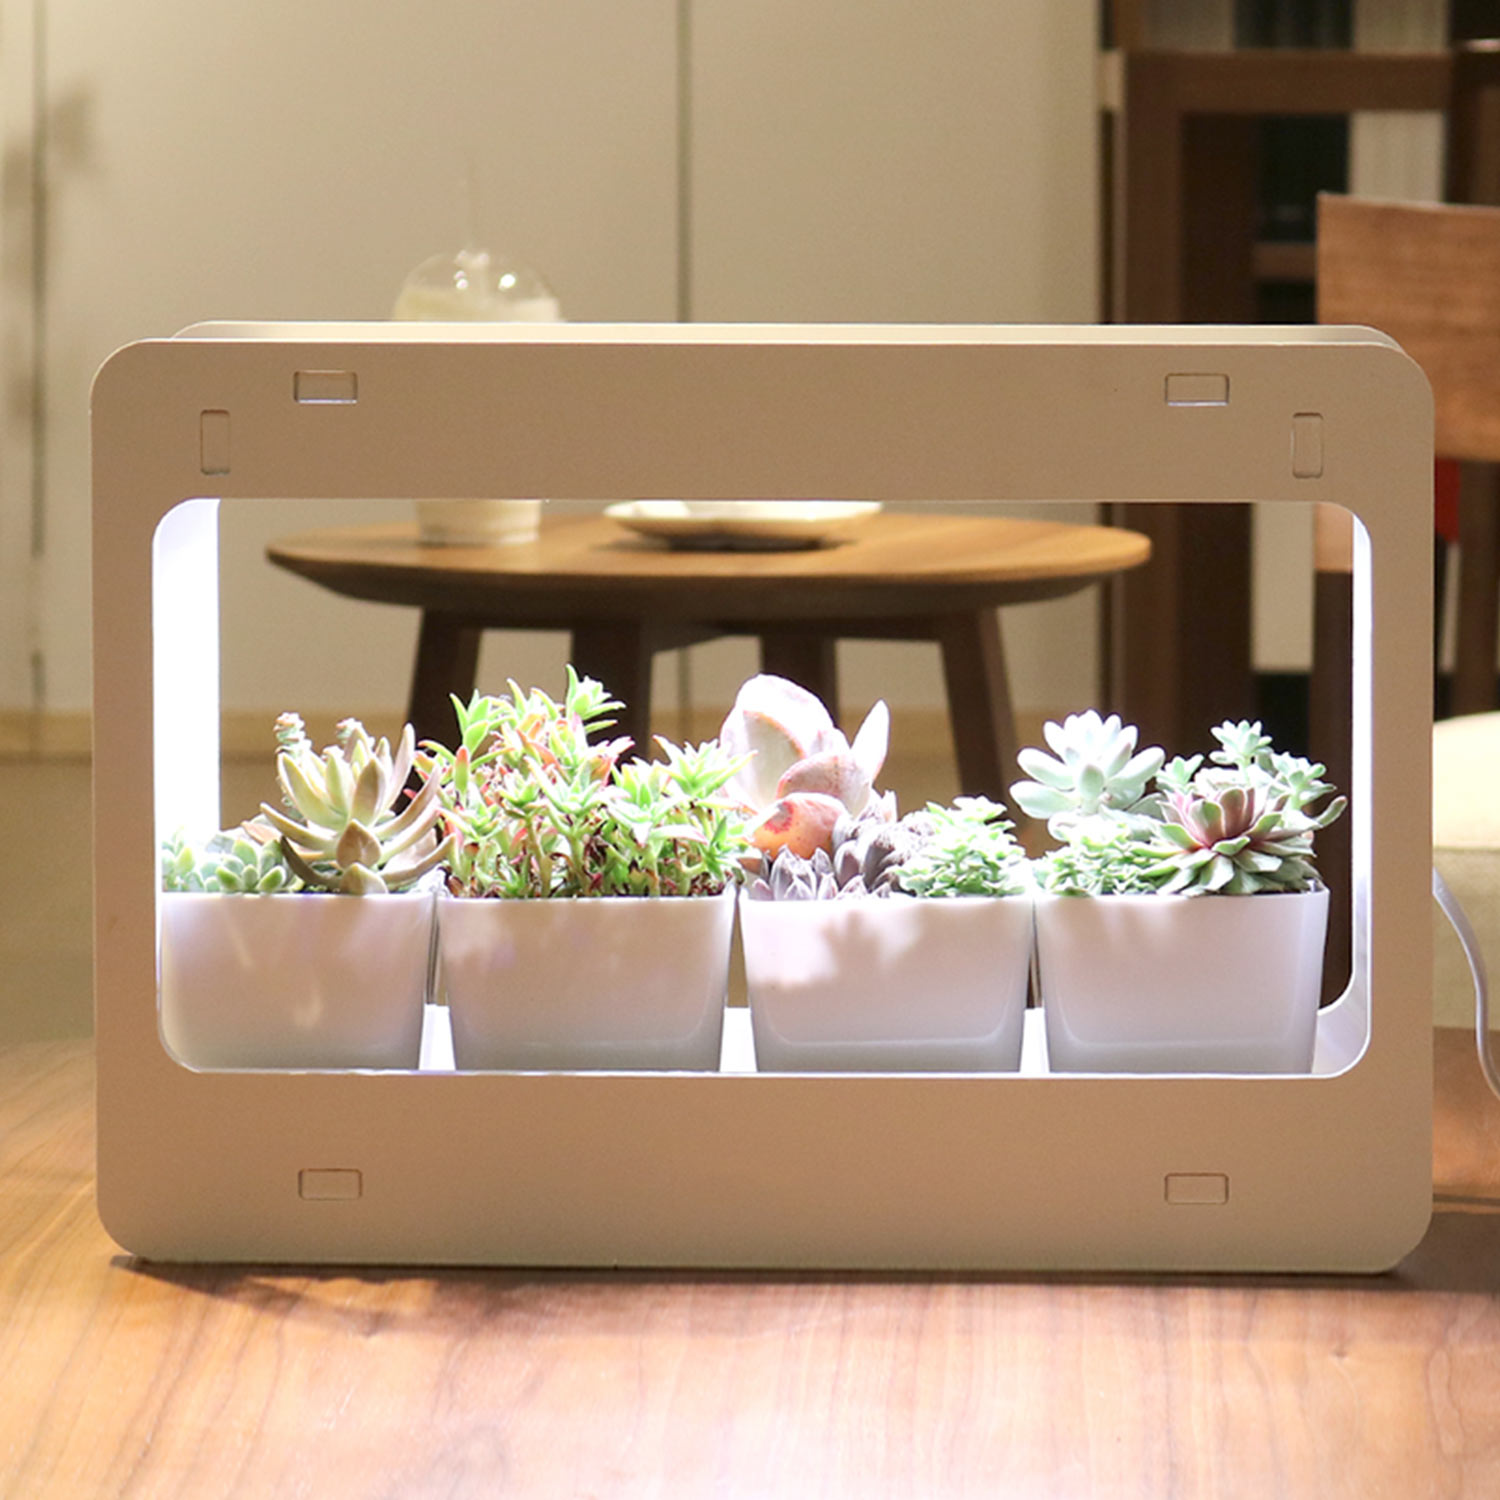 MG004 Plant Lamp, Home Miniature Gardens, kurima Herb Mwenje, Mini Herb Garden Indoor